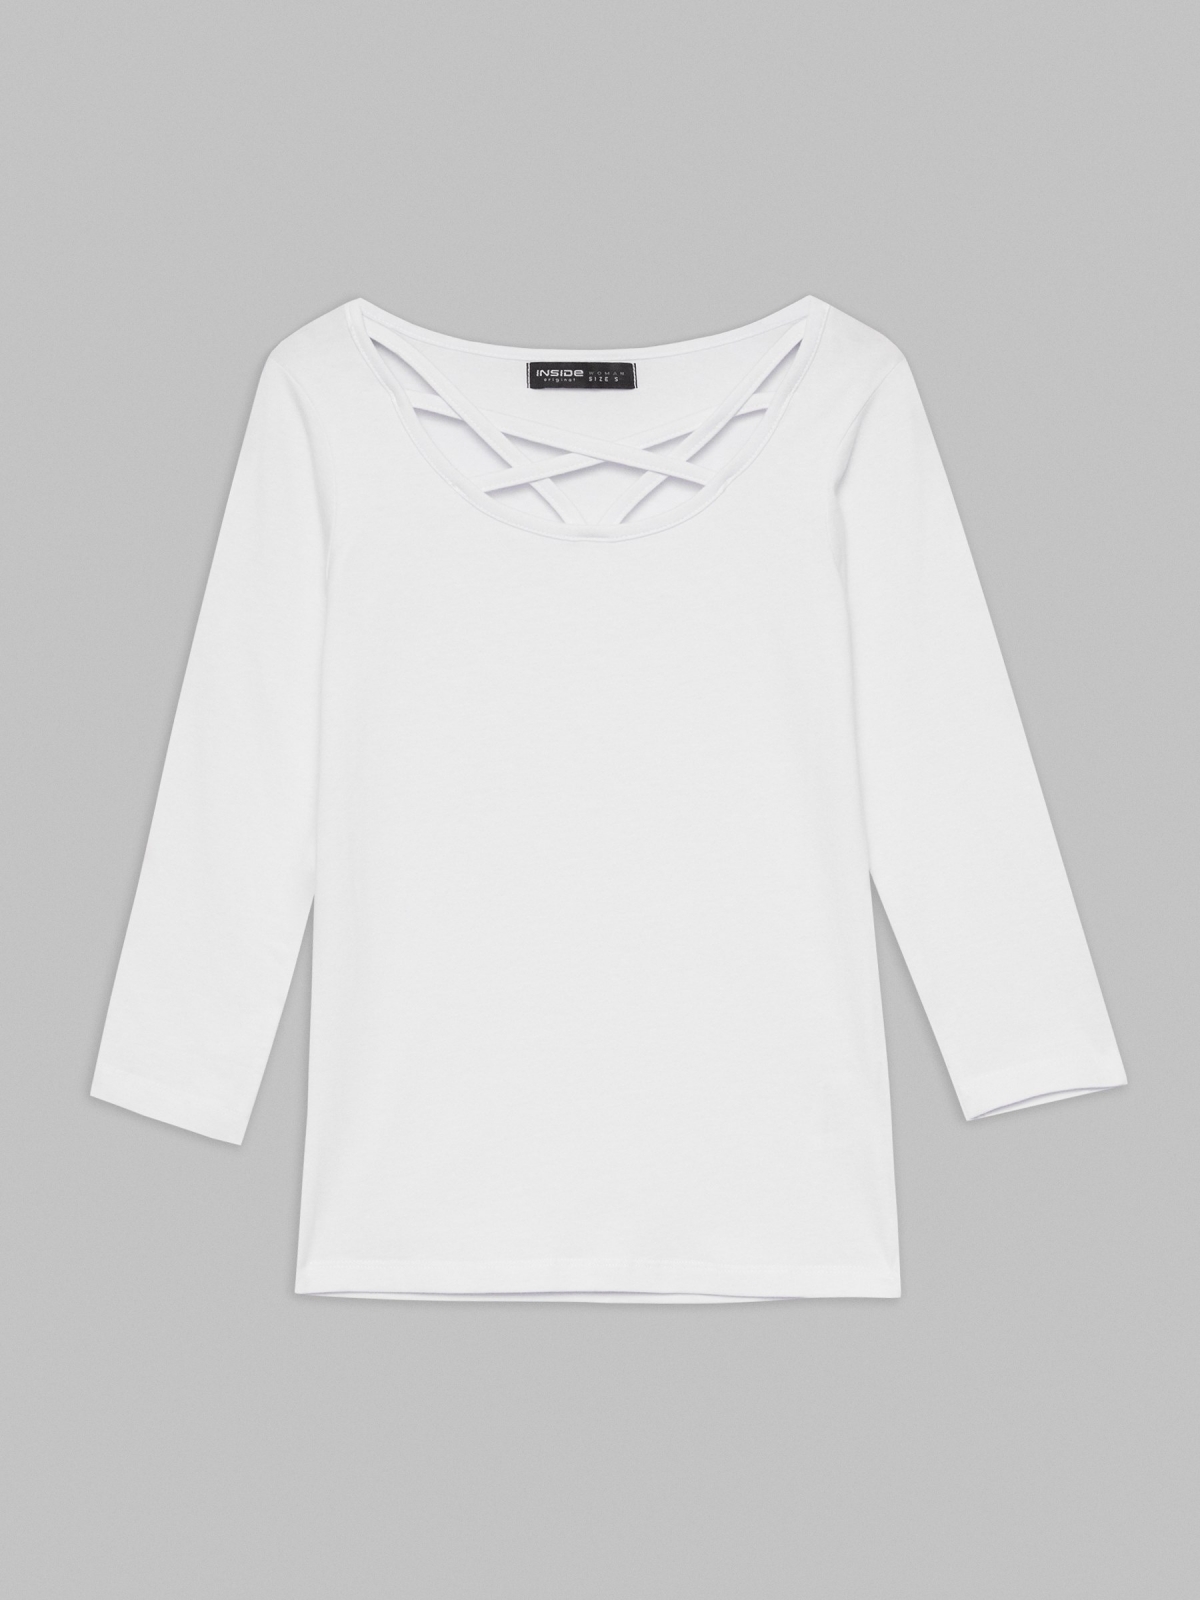  Camiseta slim escote con tiras blanco